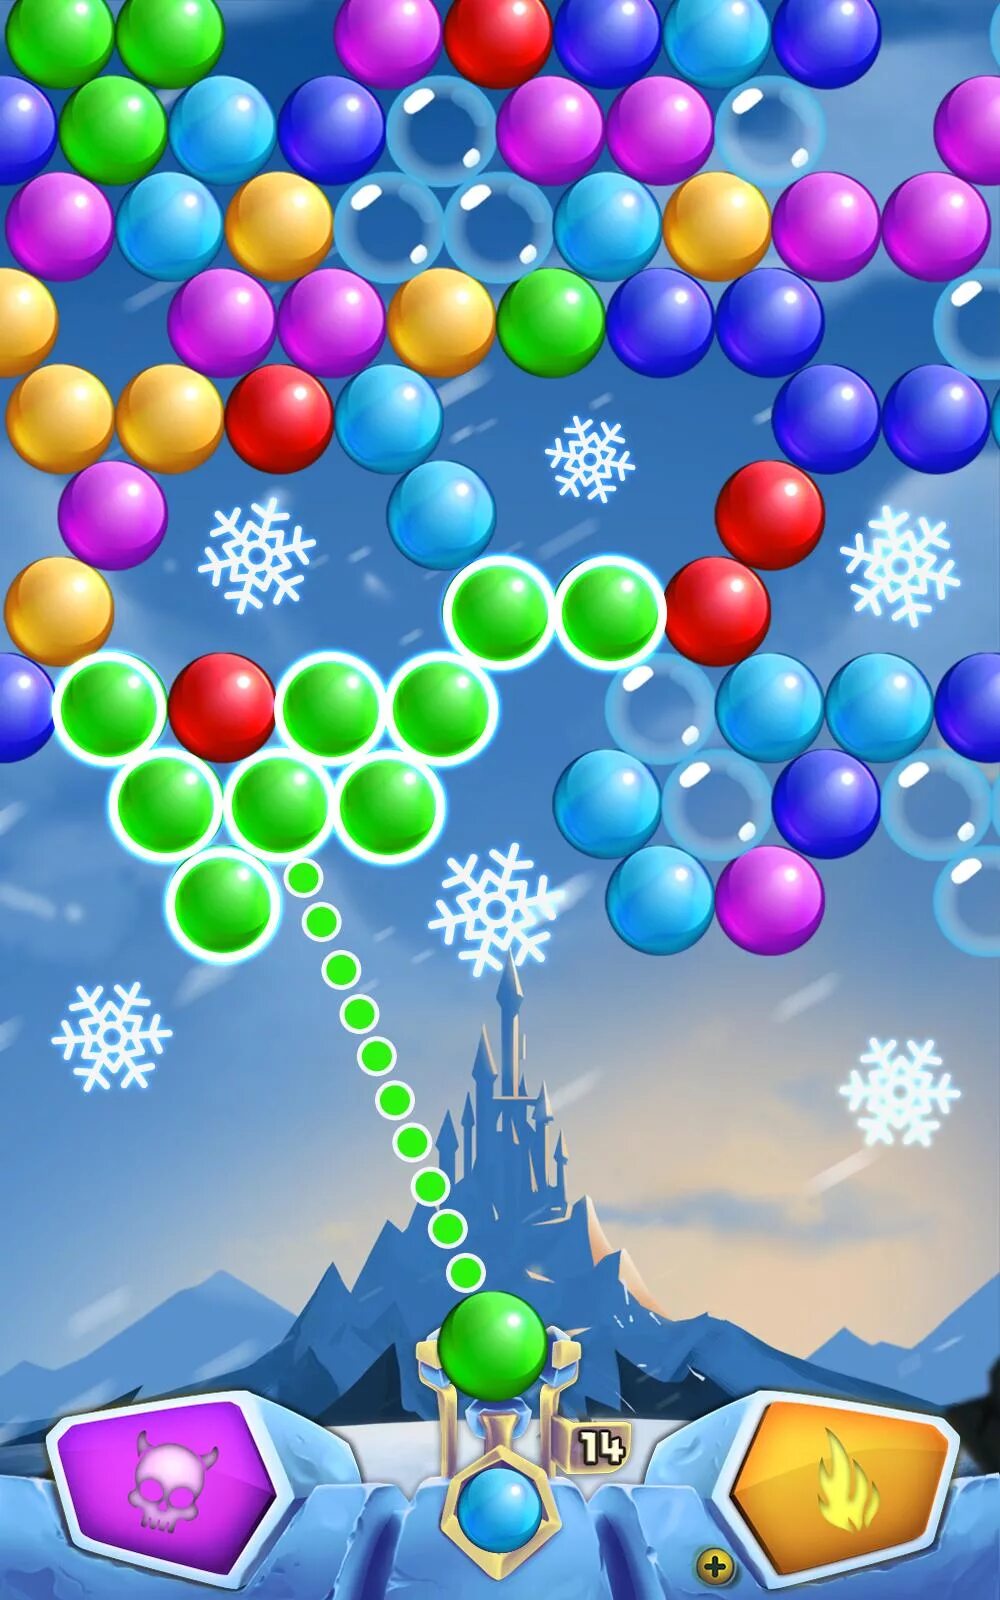 Игра волшебные шары. Магические пузыри игра. Волшебные шары игра. Волшебный пузырь - Magical Bubble Shooter. Бабл шутер зима лето.